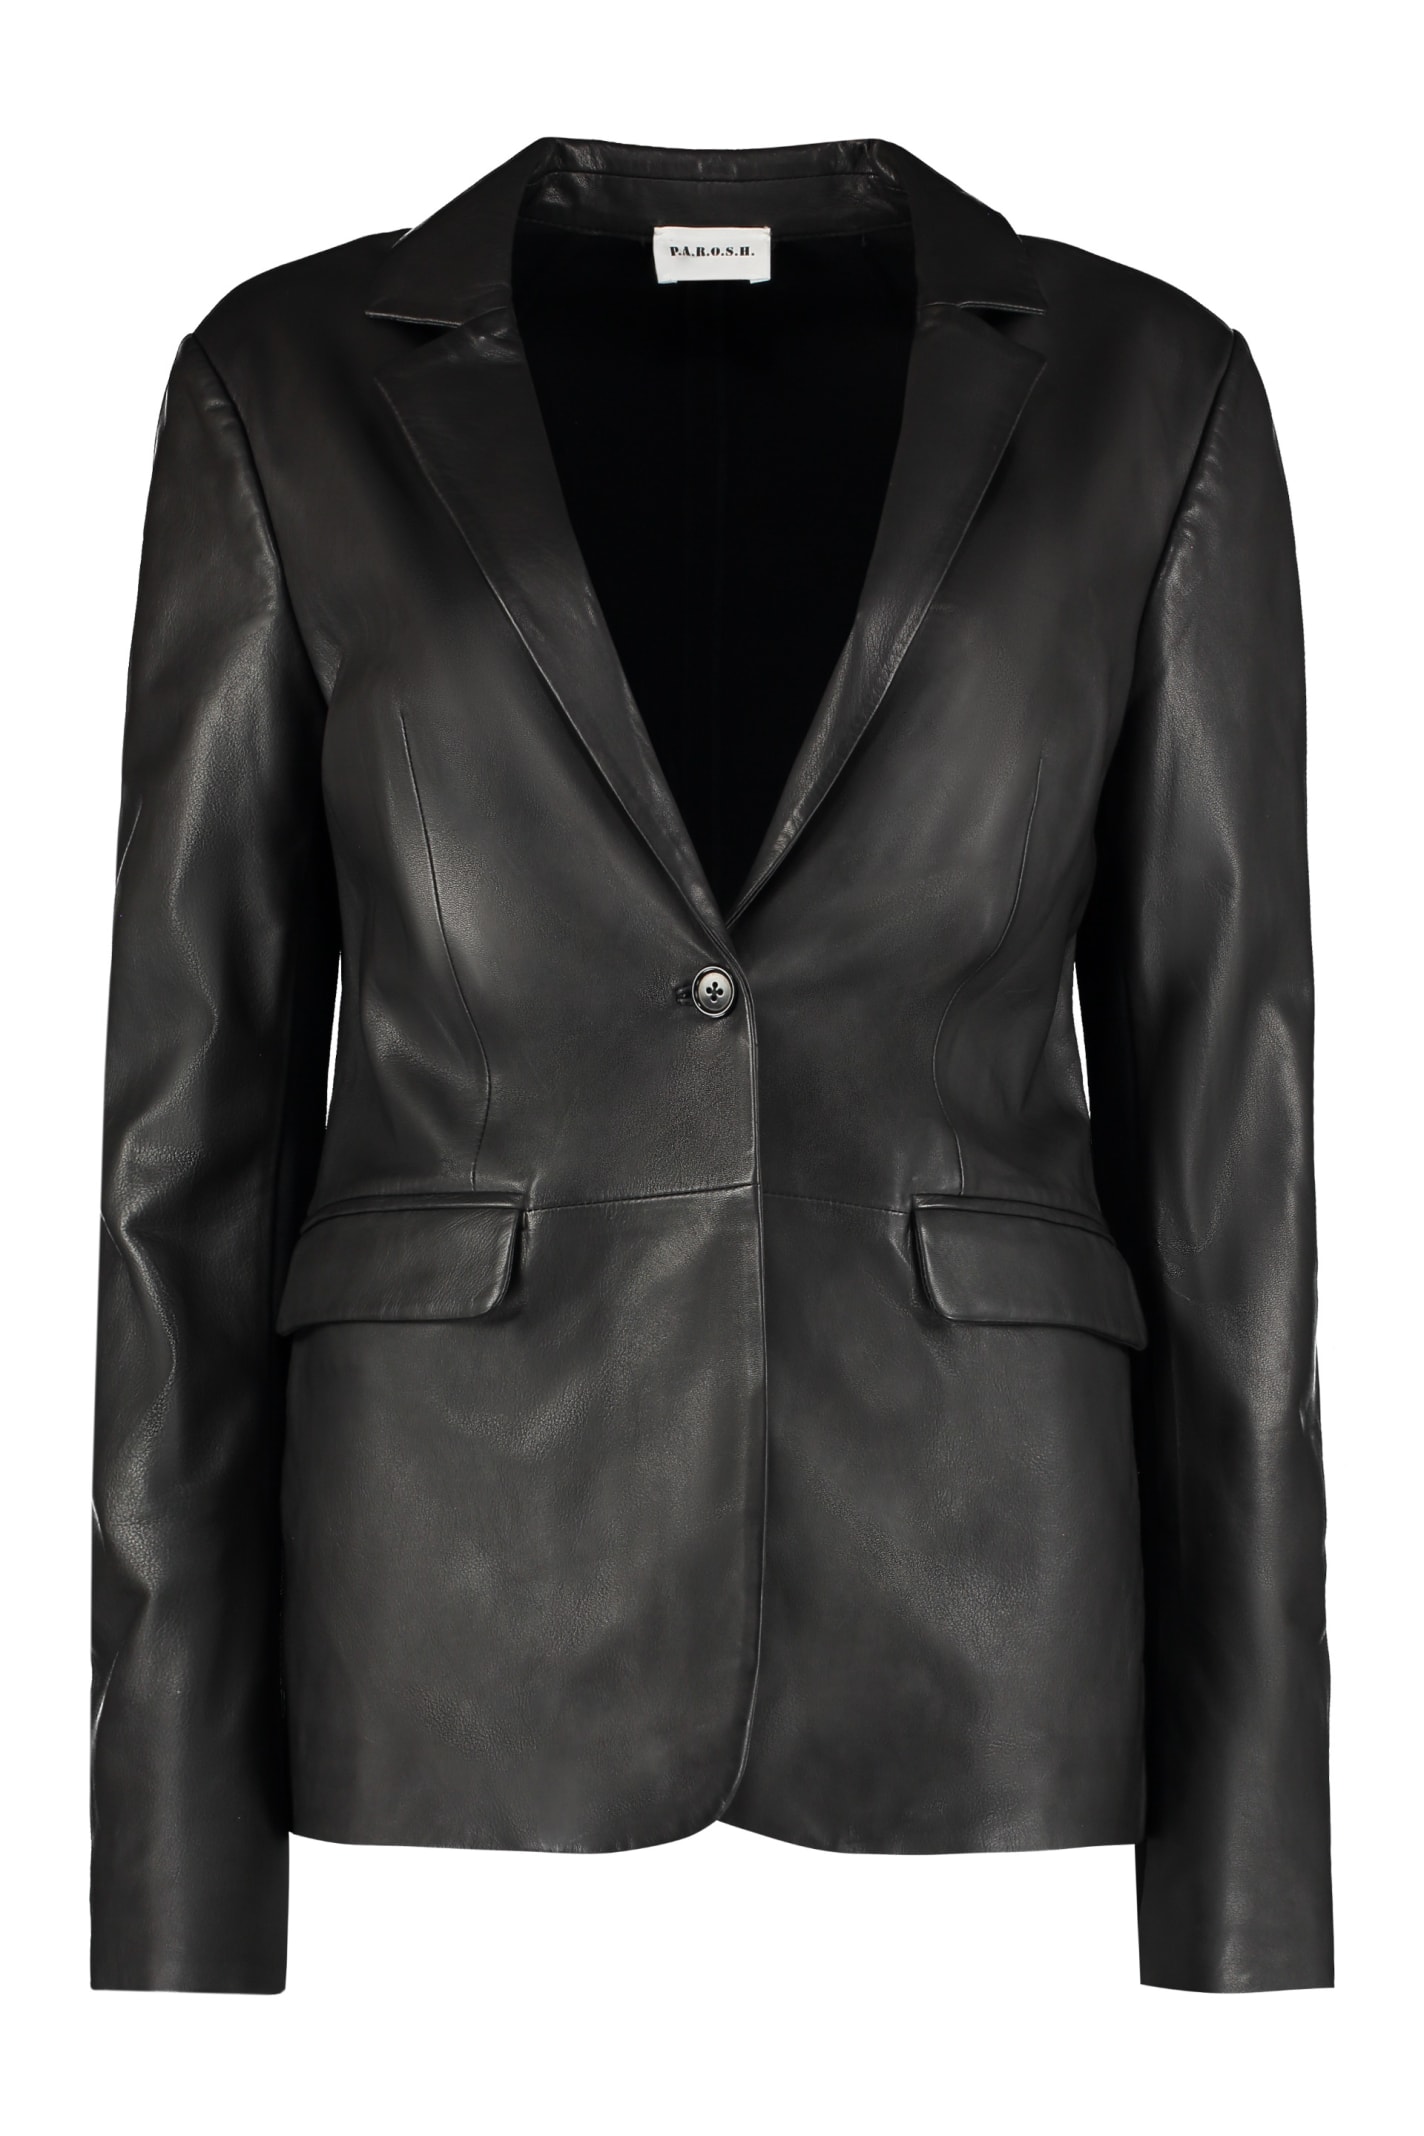 Parosh Maciockx Leather Jacket